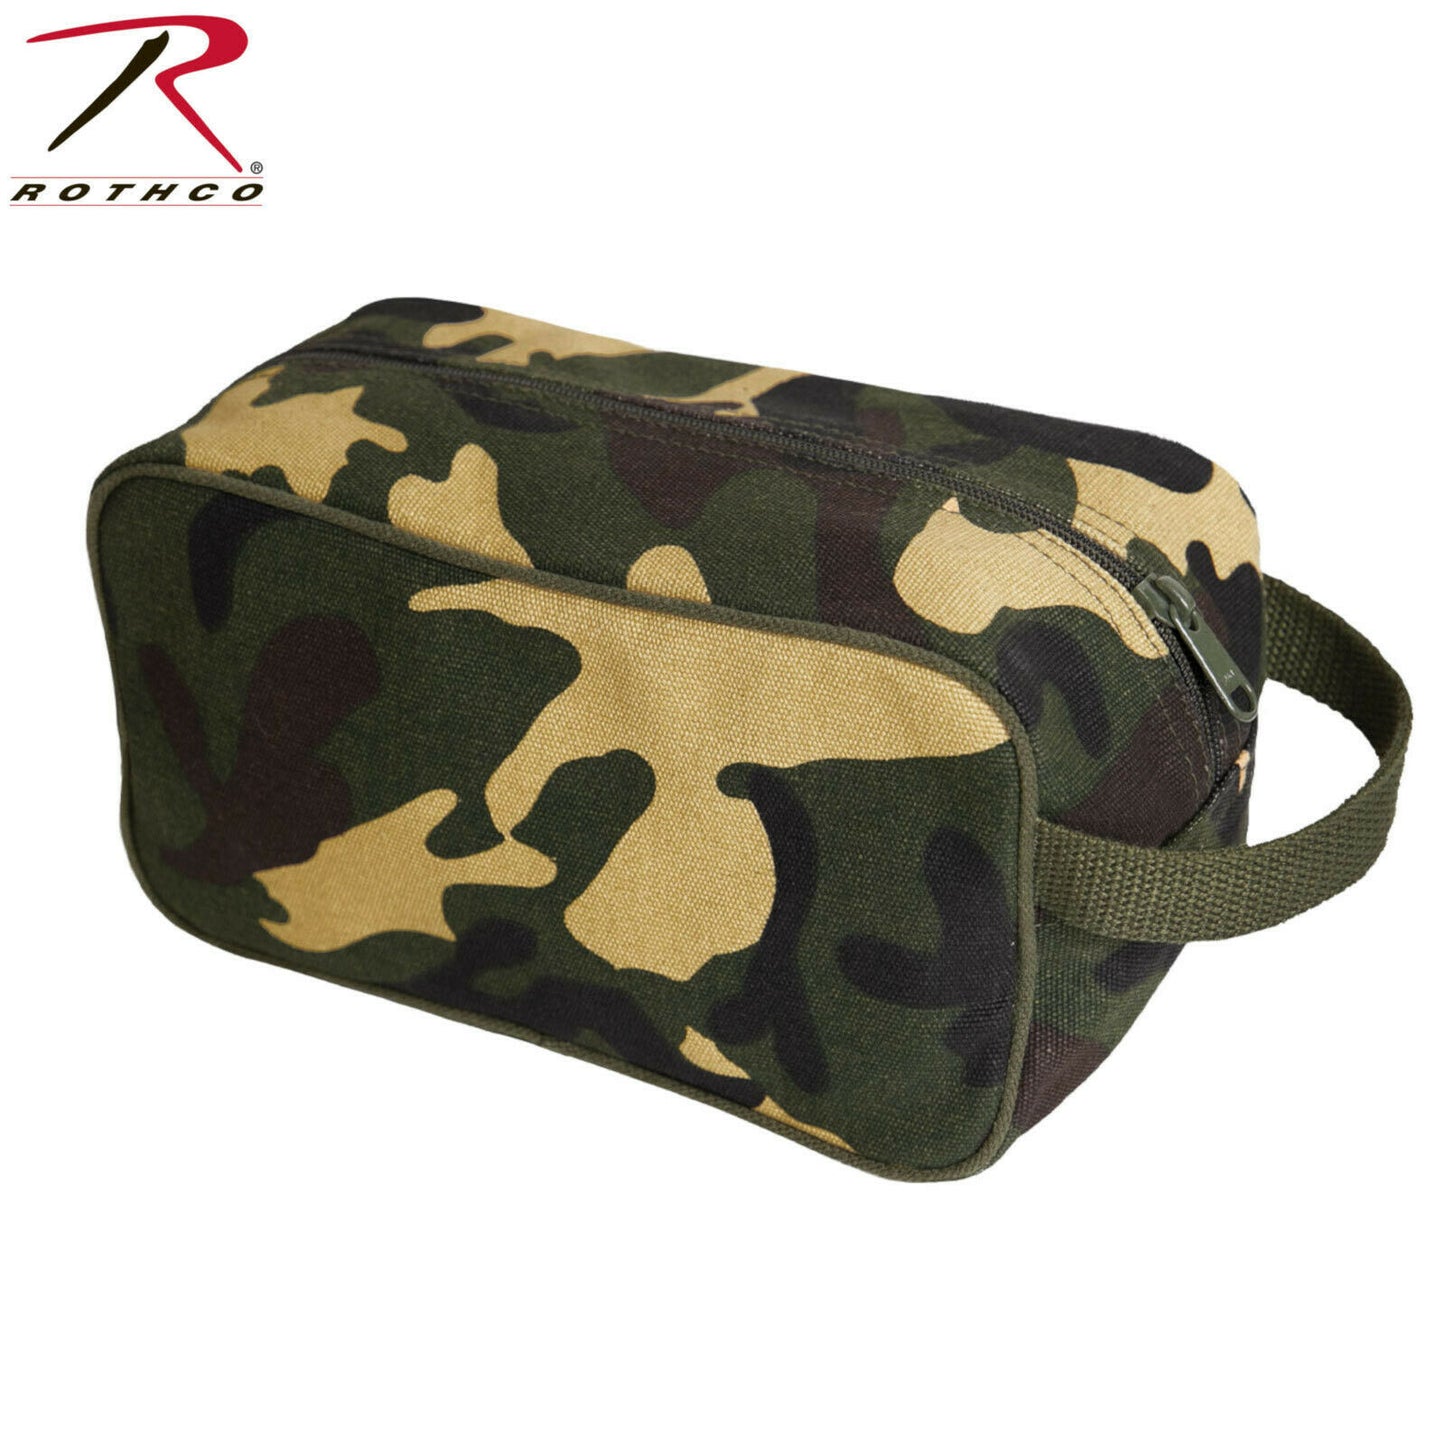 Rothco Heavyweight Canvas Camo Travel Kit - Camouflage Toiletry Travel Bag